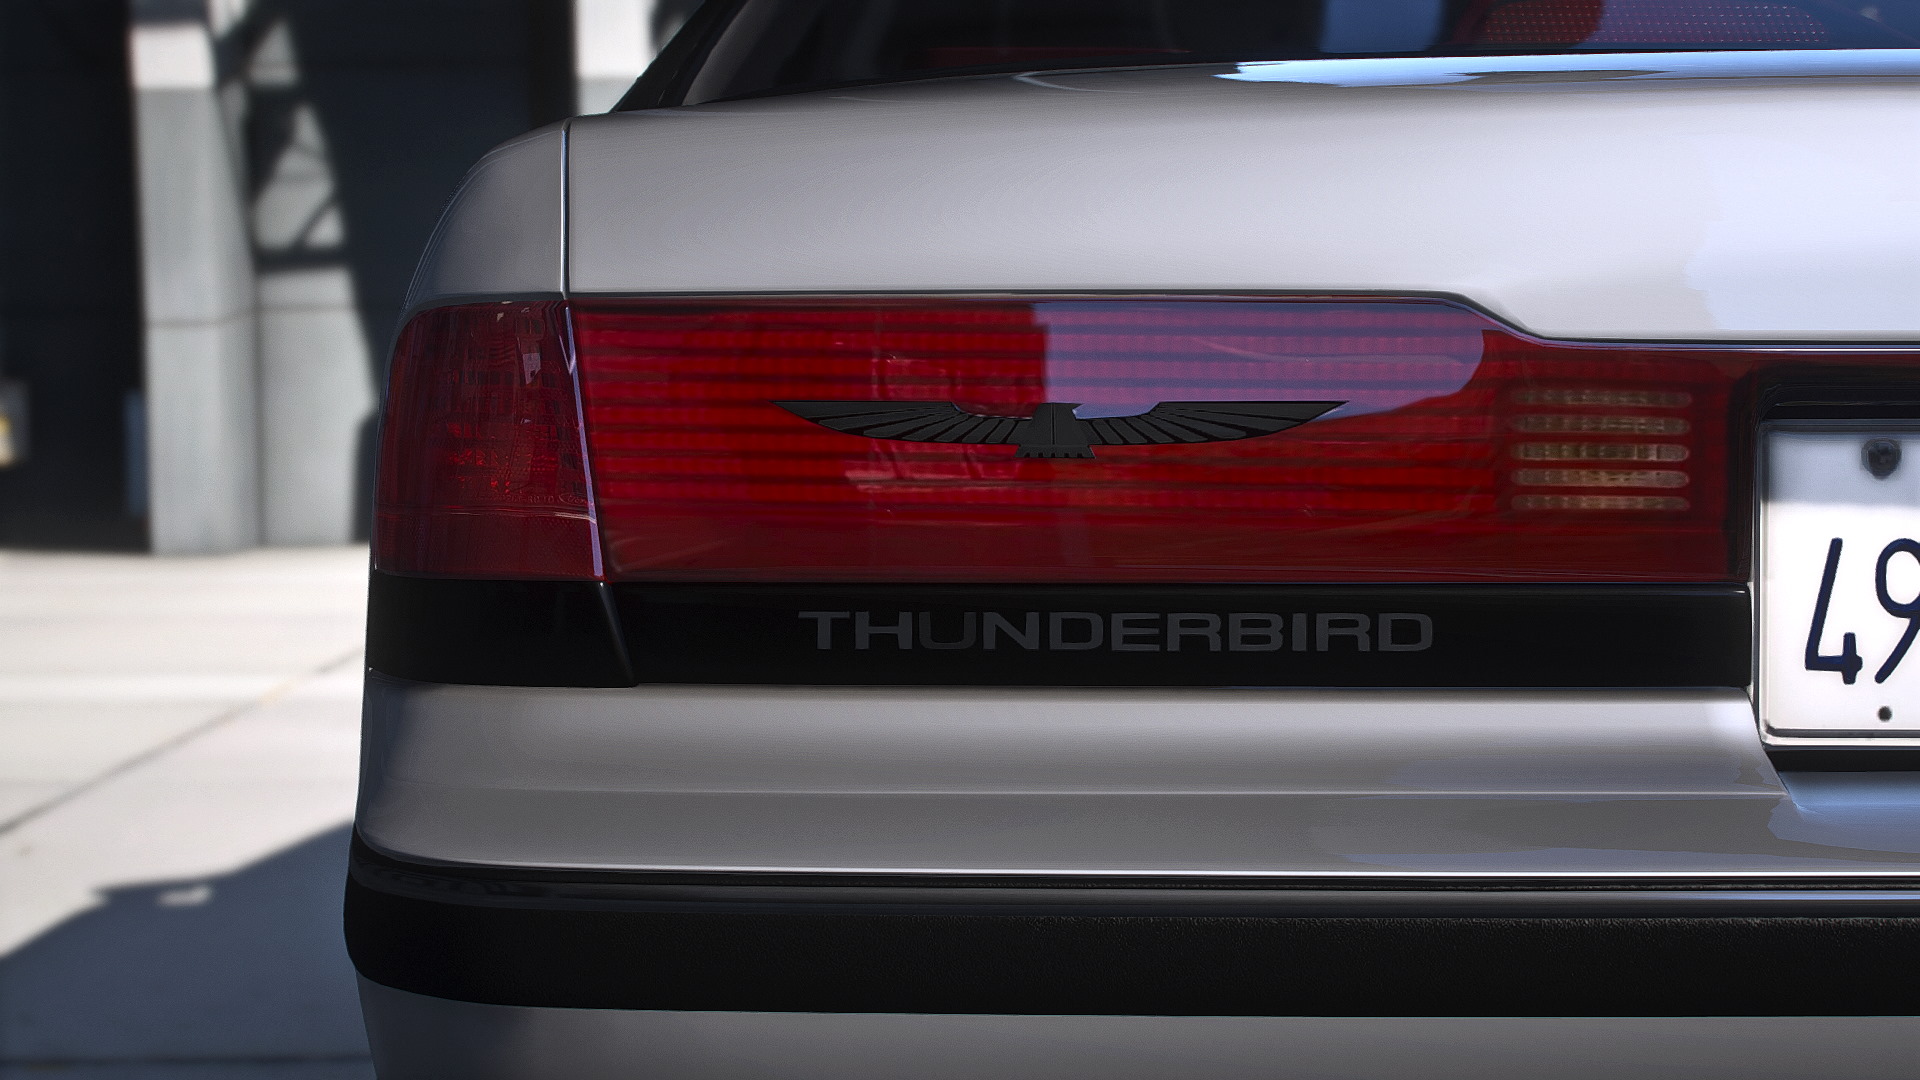 Ford thunderbird 1989 lx